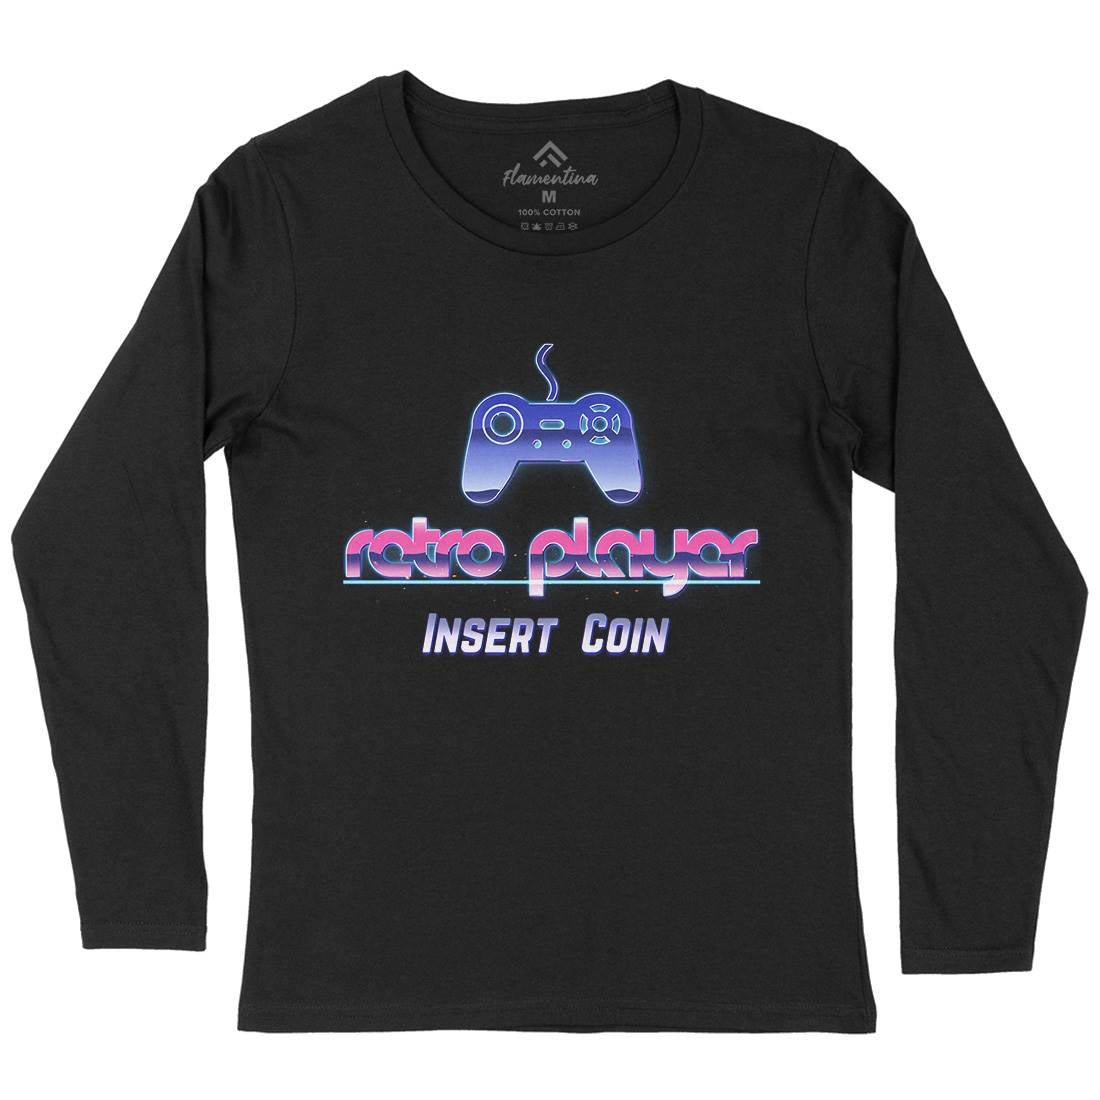 Retro Player Womens Long Sleeve T-Shirt Geek B998